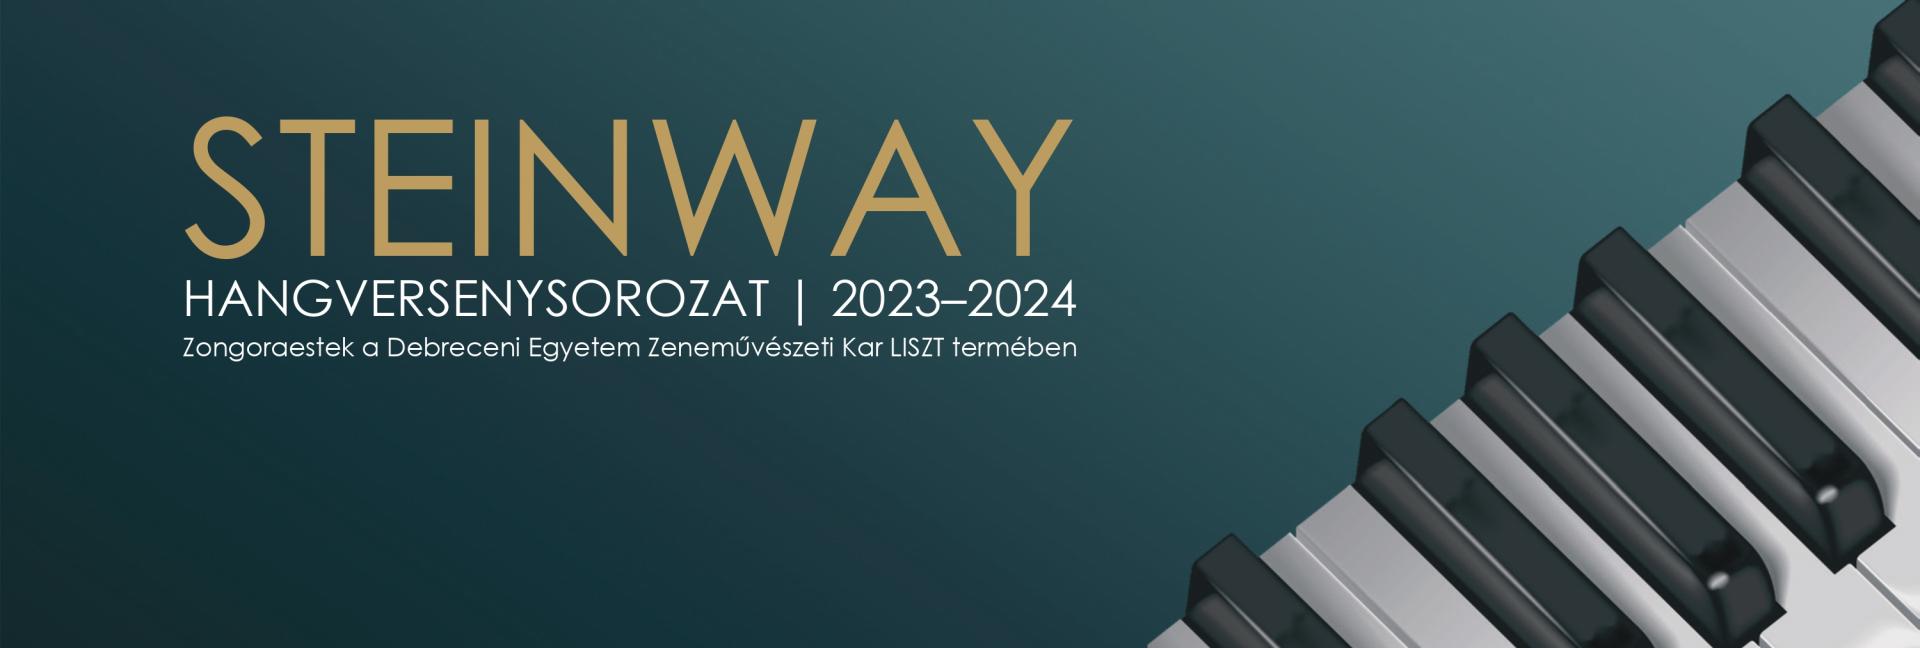 Steinway hangversenysorozat 2023-24